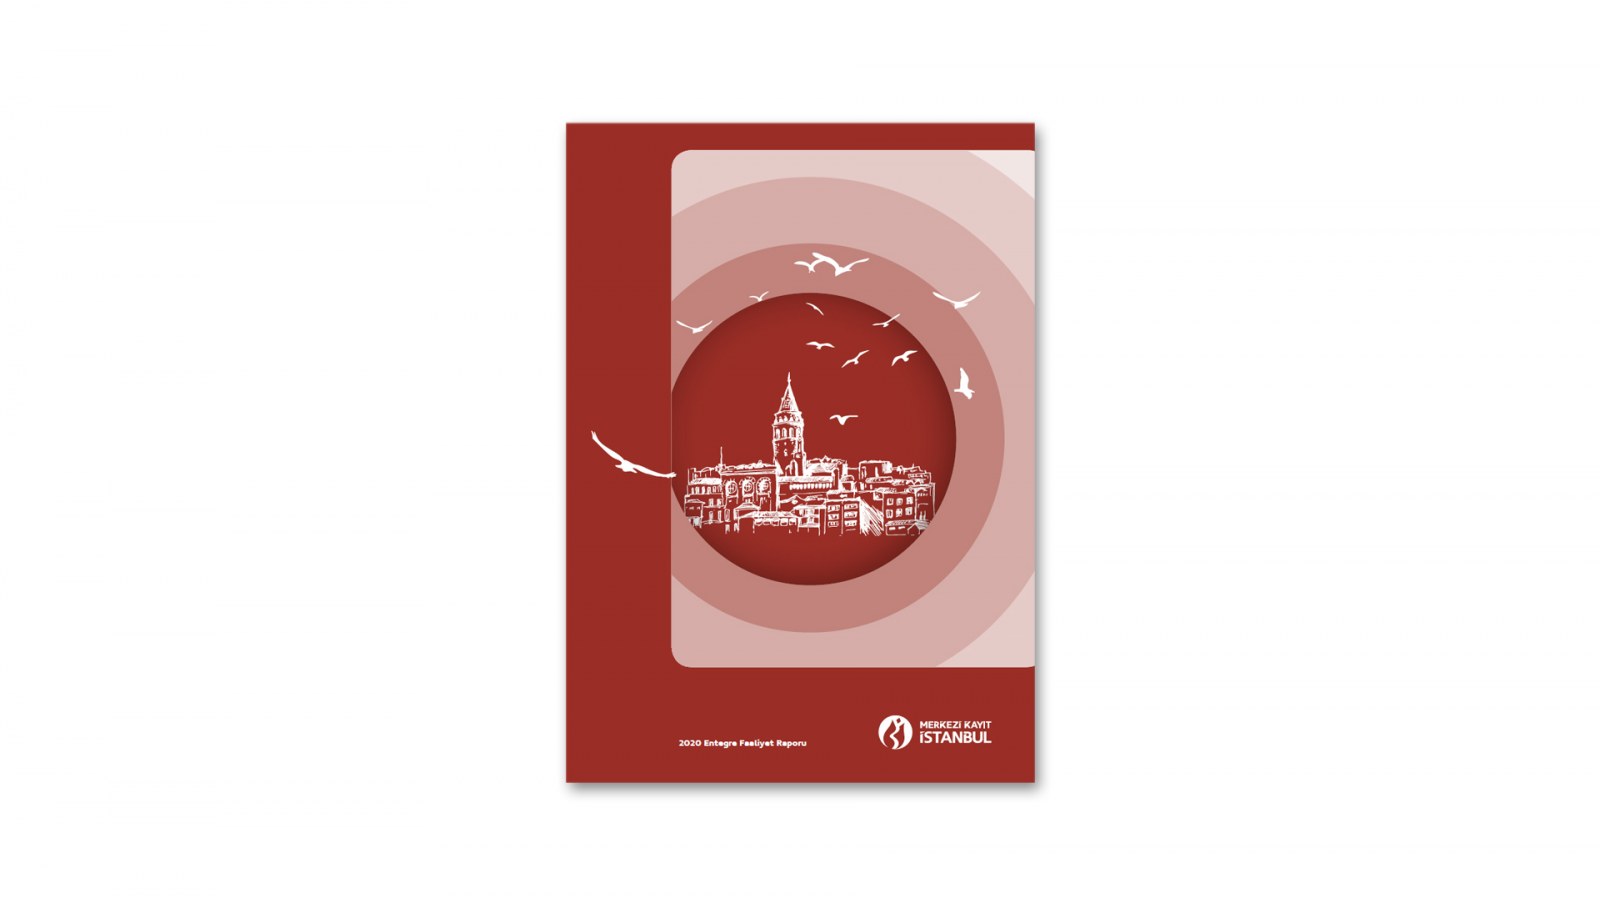 MERKEZİ KAYIT İSTANBUL / 2020 Entegre Faaliyet Raporu / 2020 Integrated Annual Report